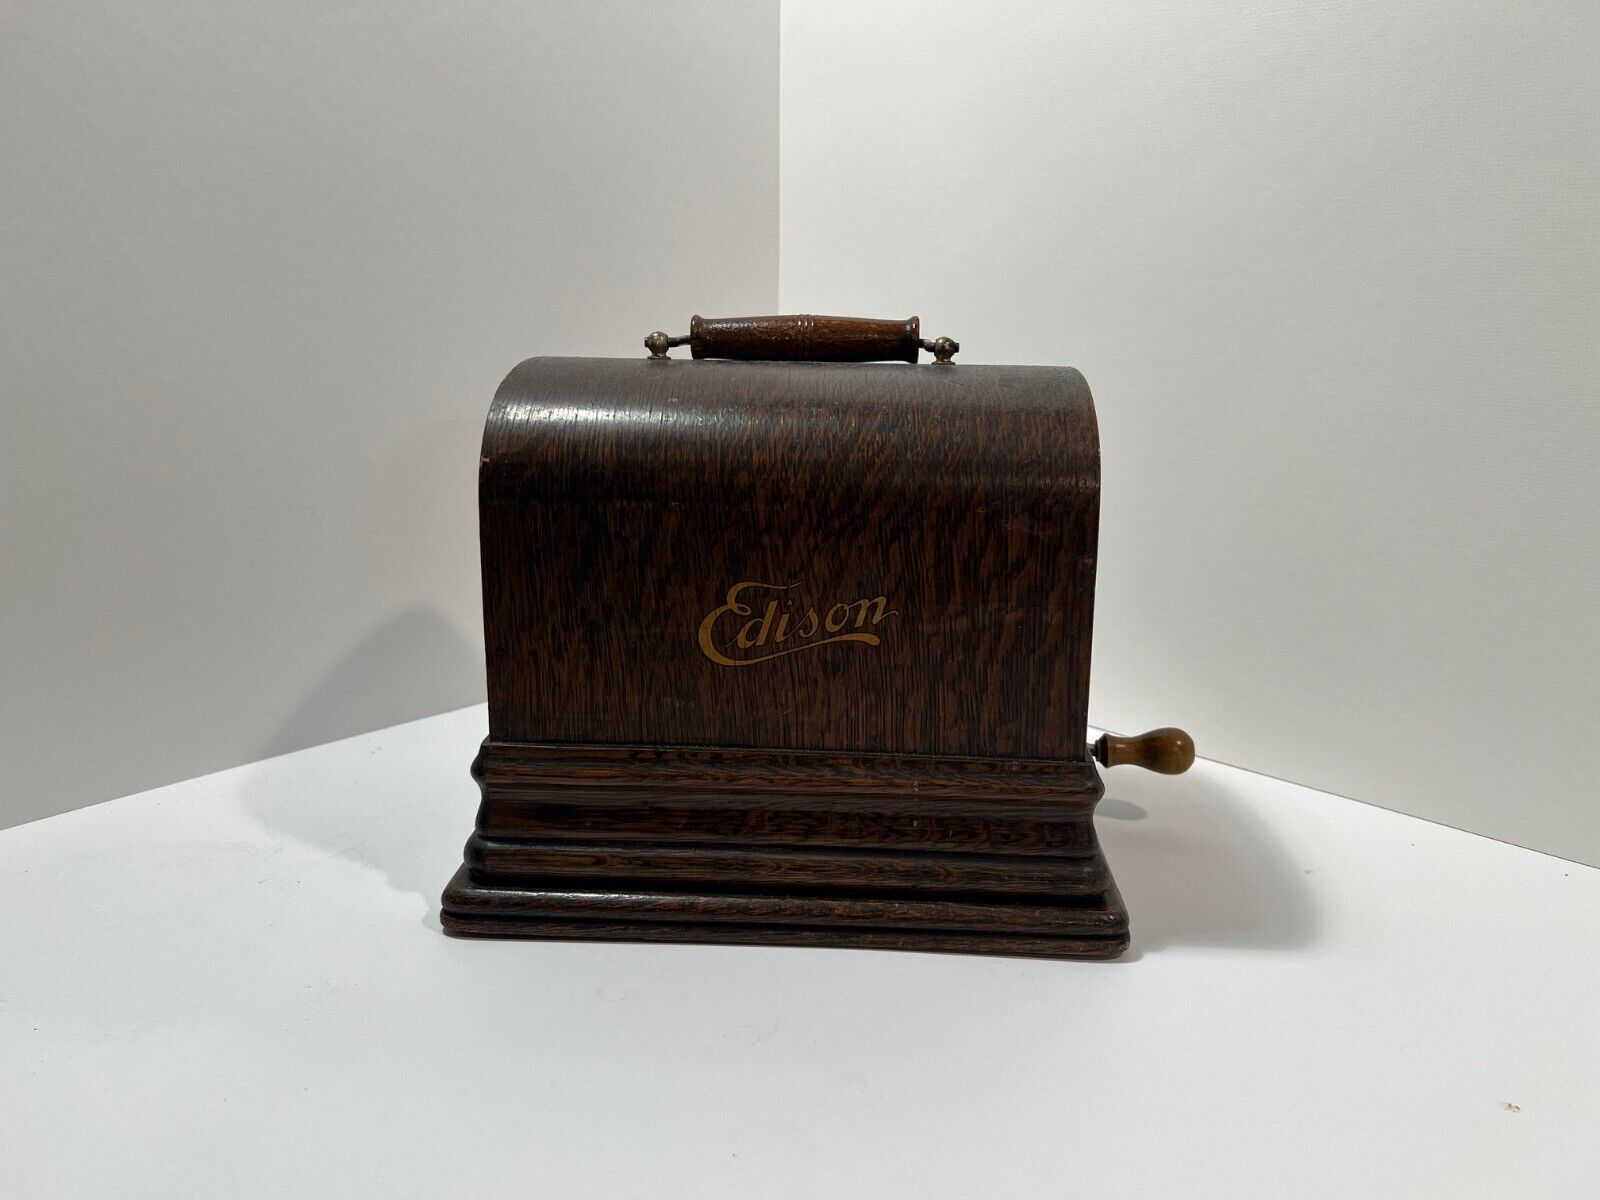  Edison Gem Phonograph and \